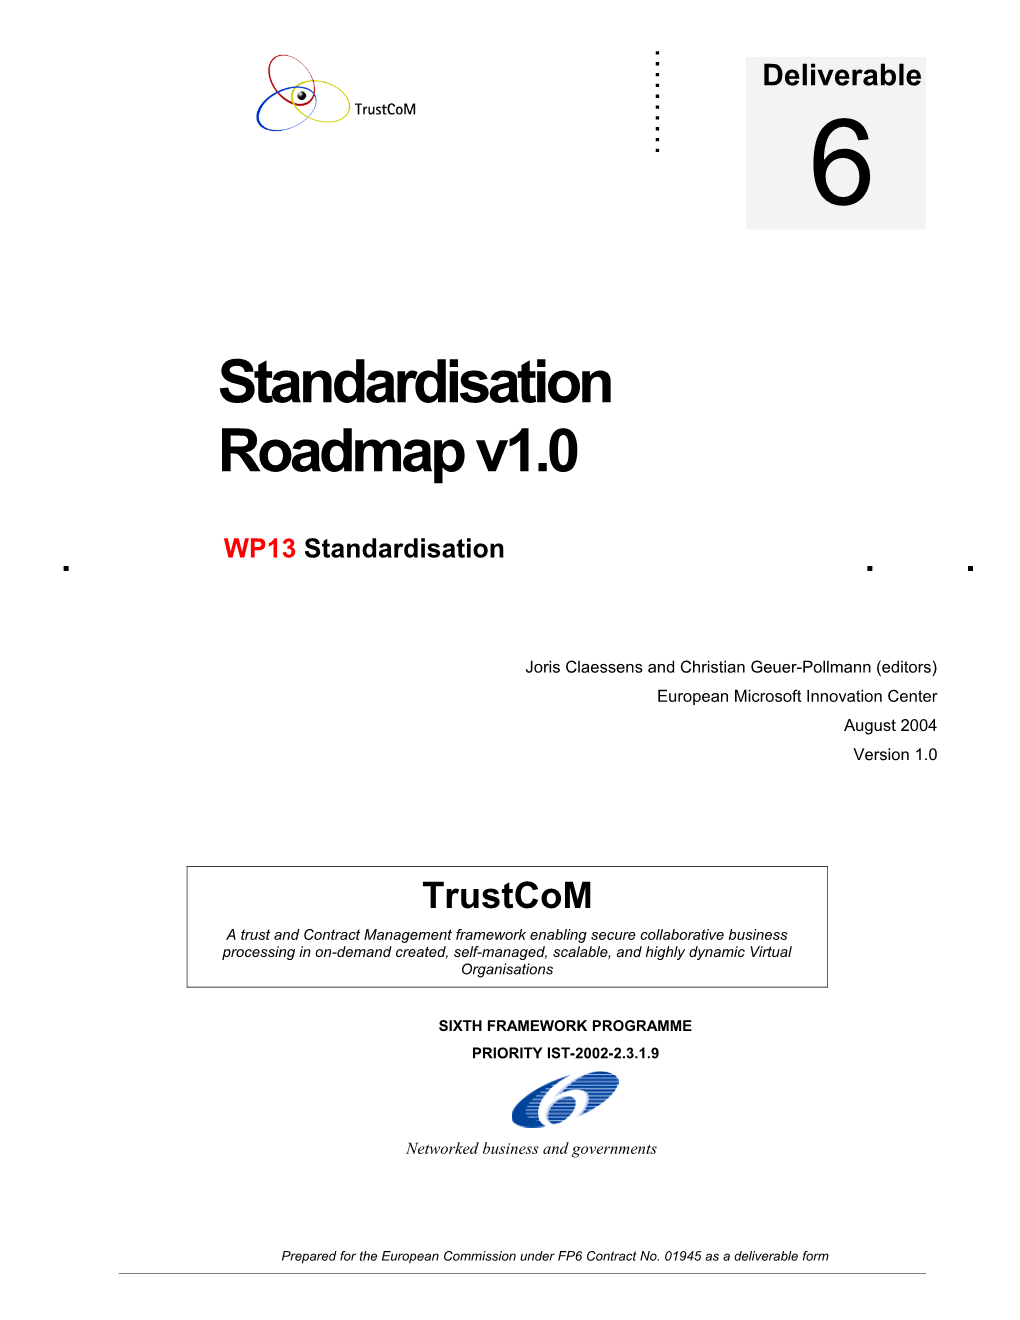 Standardisation Roadmap, Version 1.0